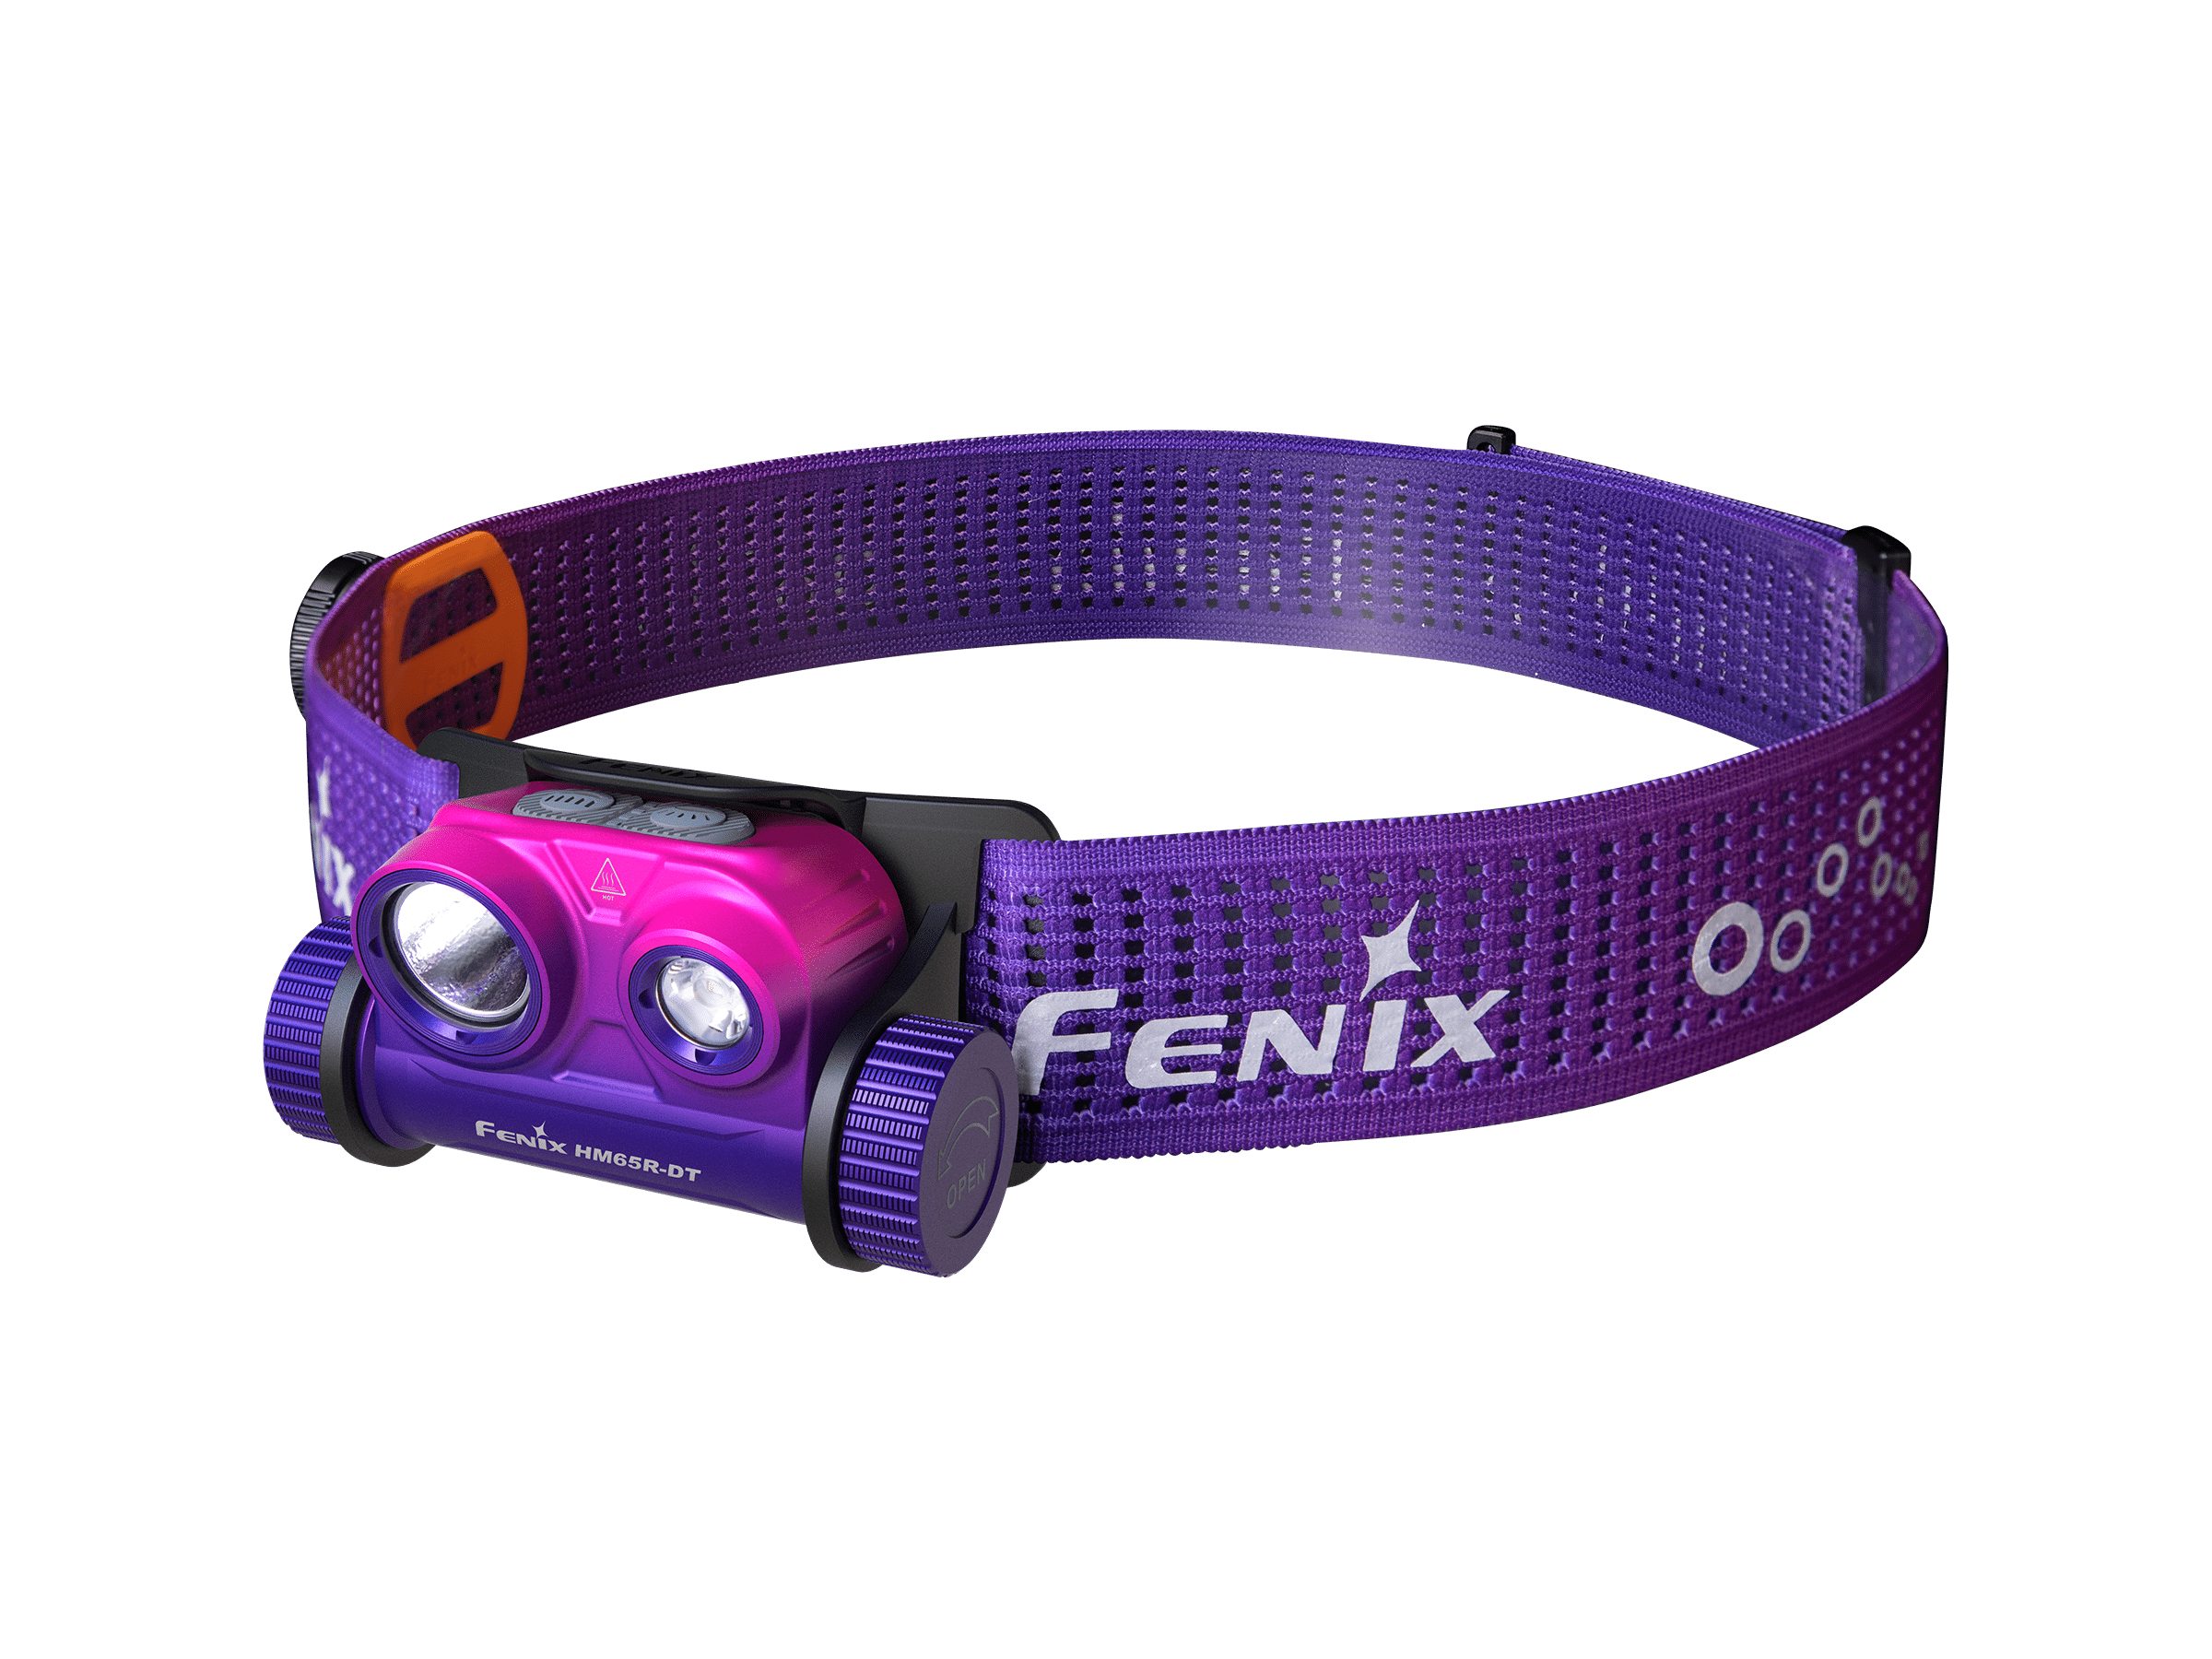 Fenix HM65R-DT Trail Running LED Headlamp